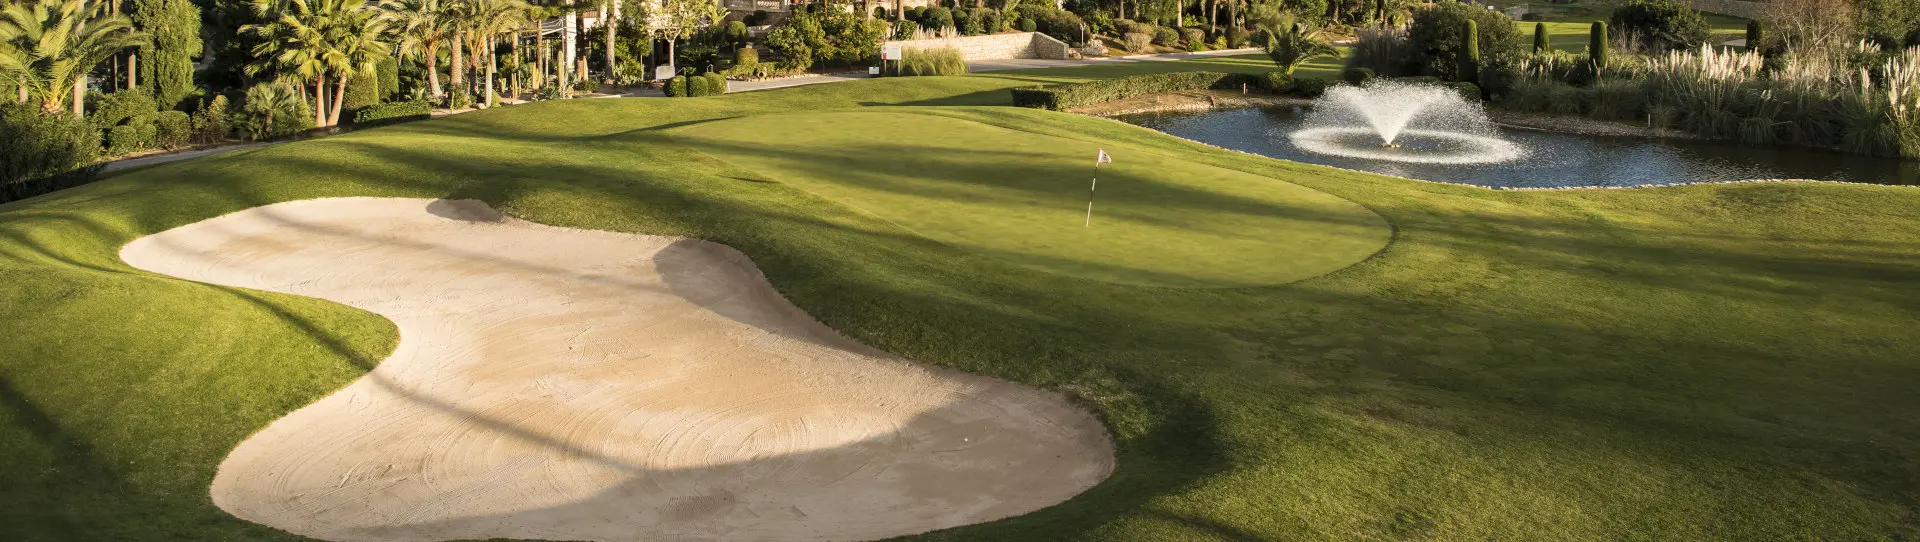 Spain Golf Driving Range - Golf Son Vida practice facilities - Photo 1